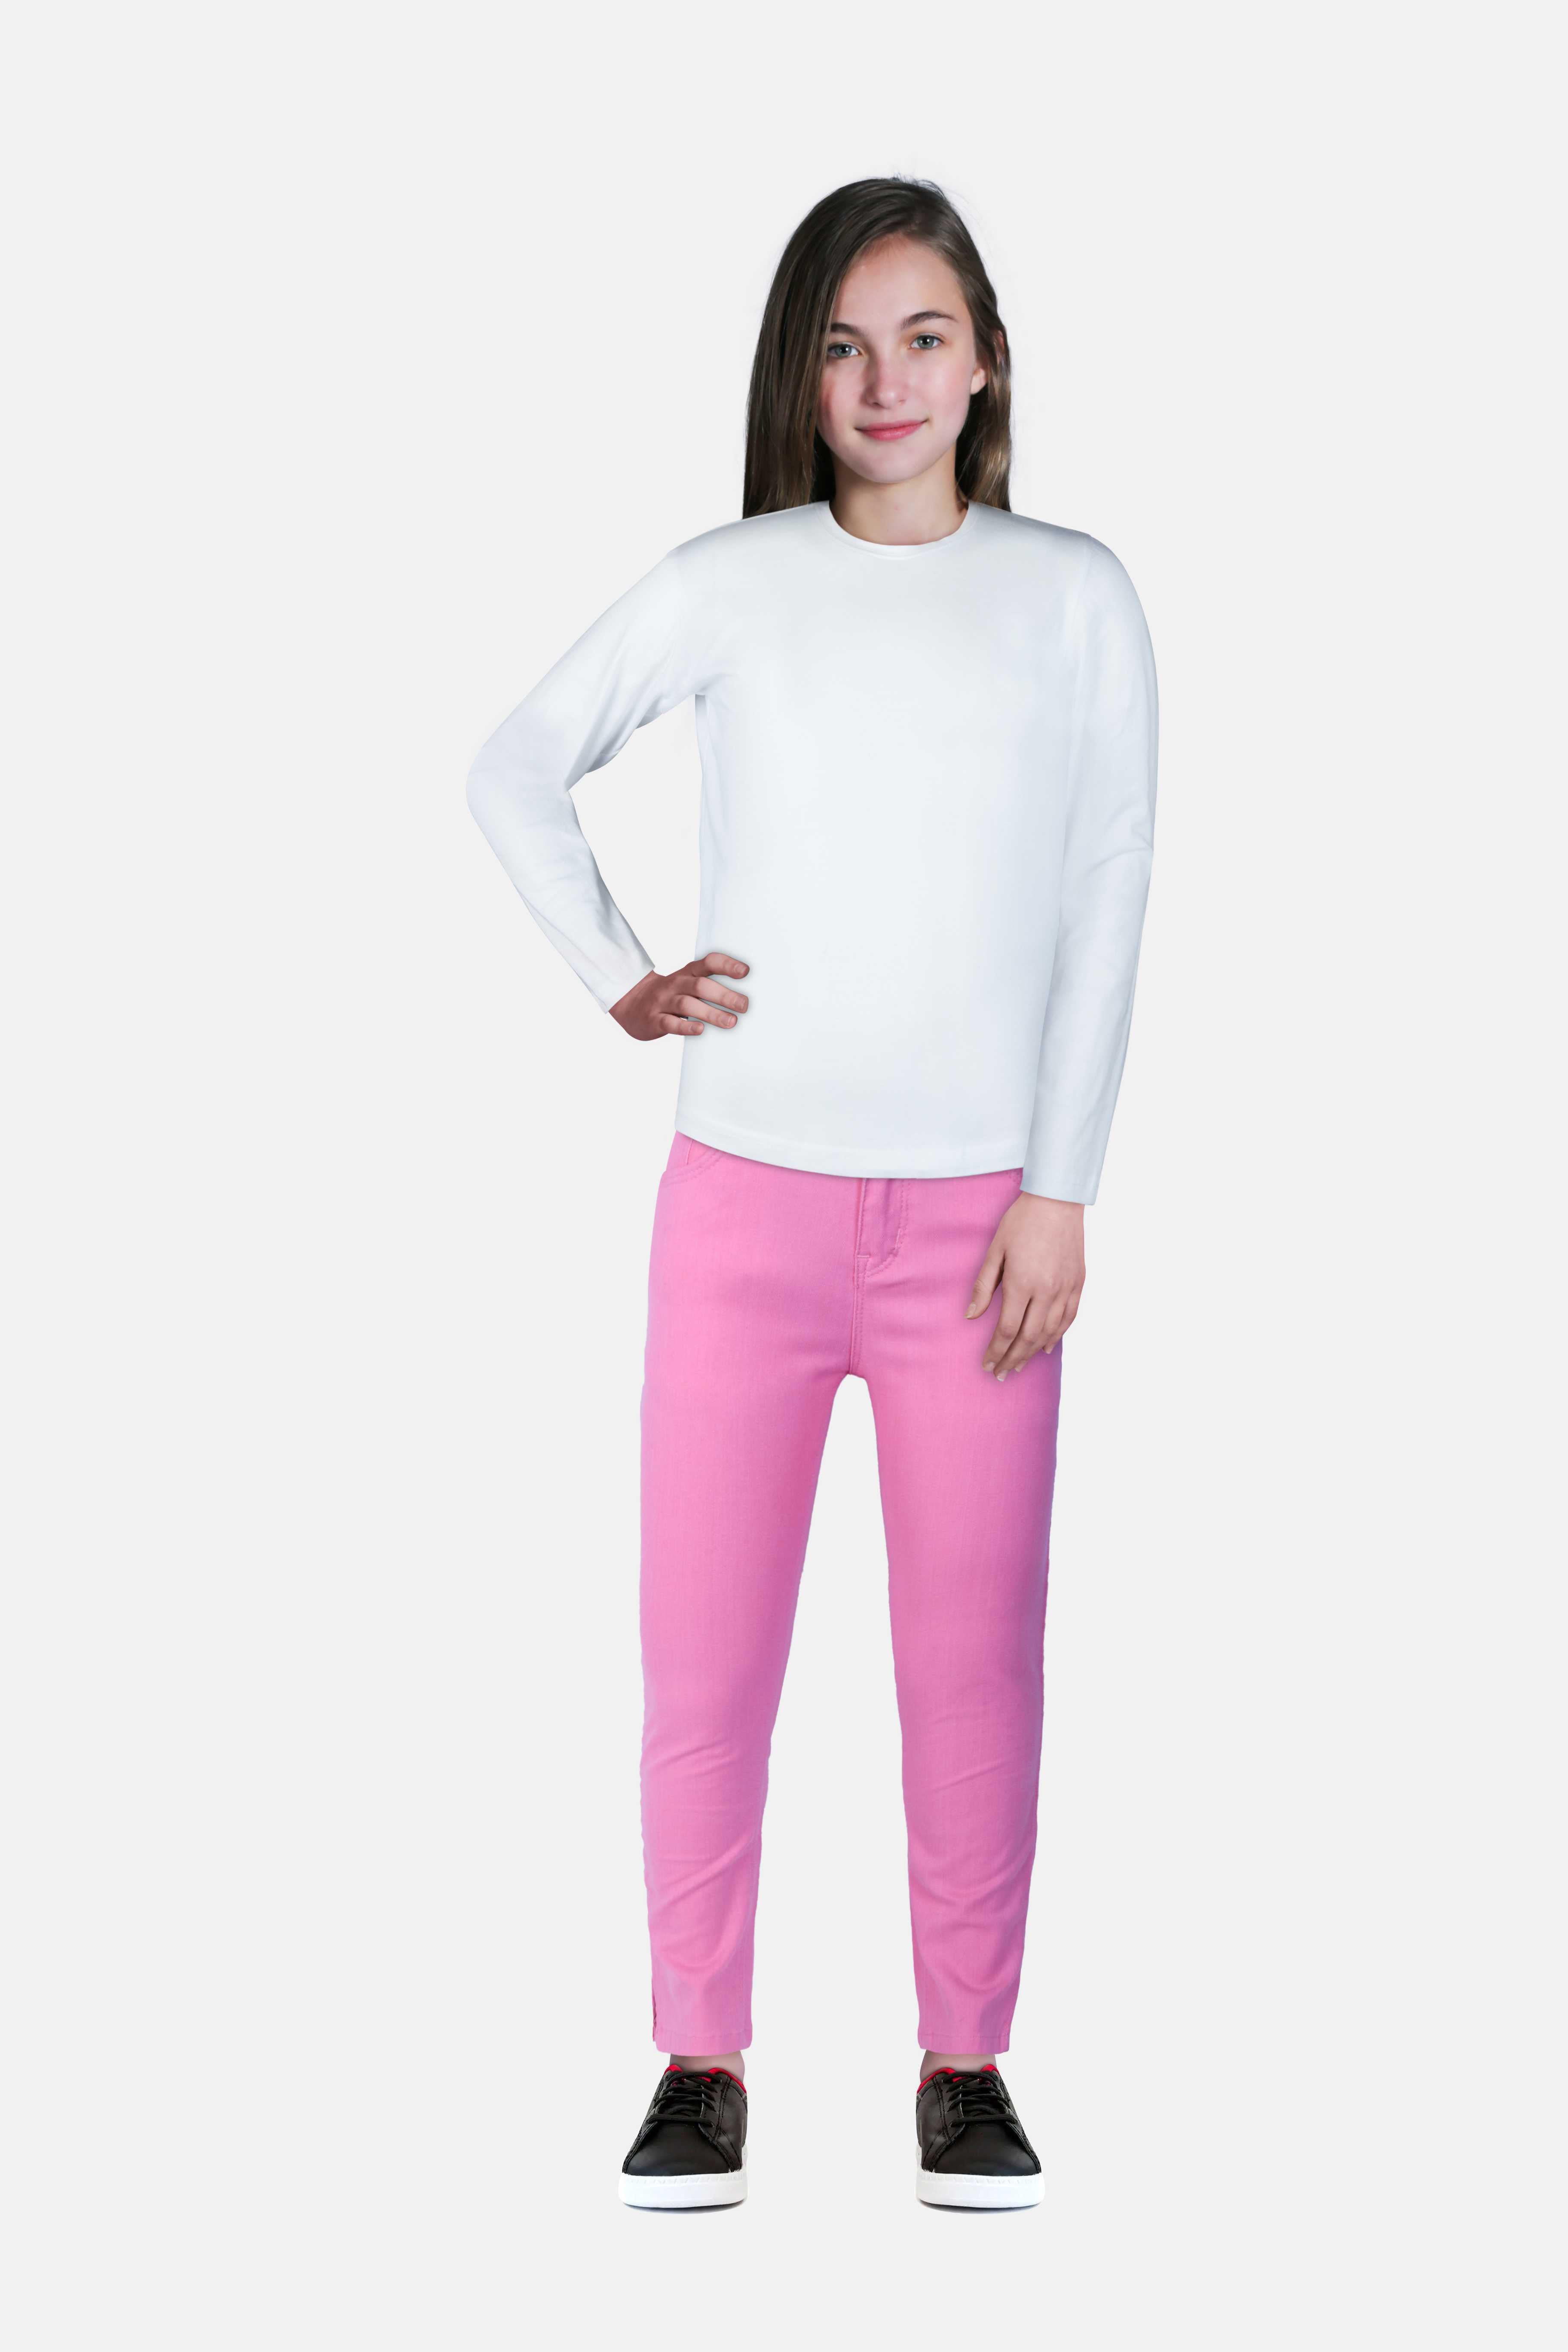 Girls Pink Cotton Denim Solid Jeans